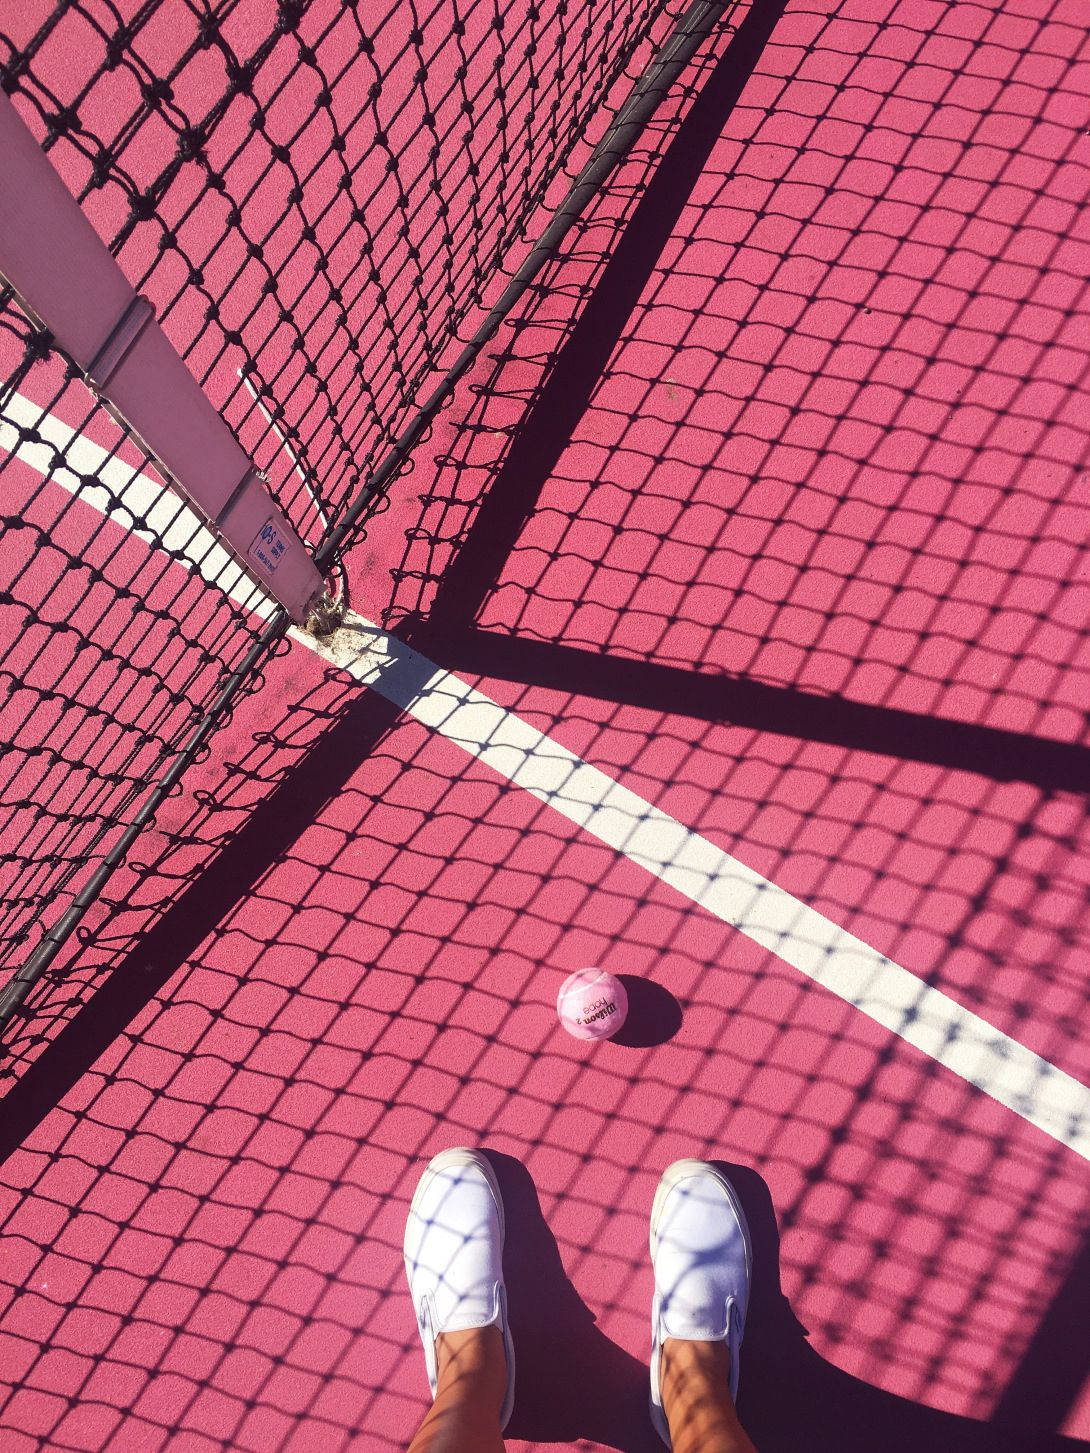 Tennis Net Shadow On Pink Court Phone Wallpaper